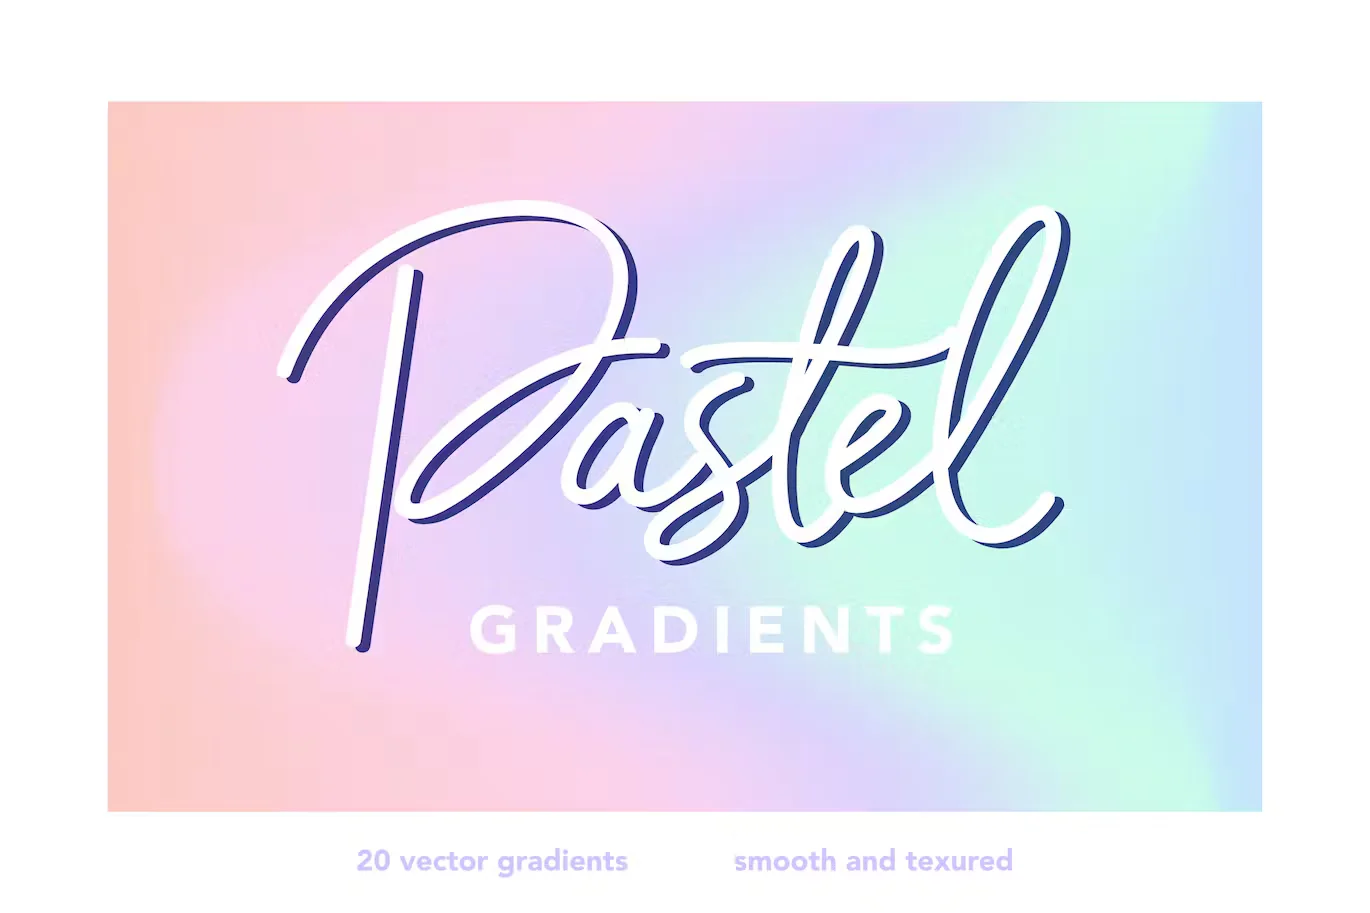 Pastel gradients